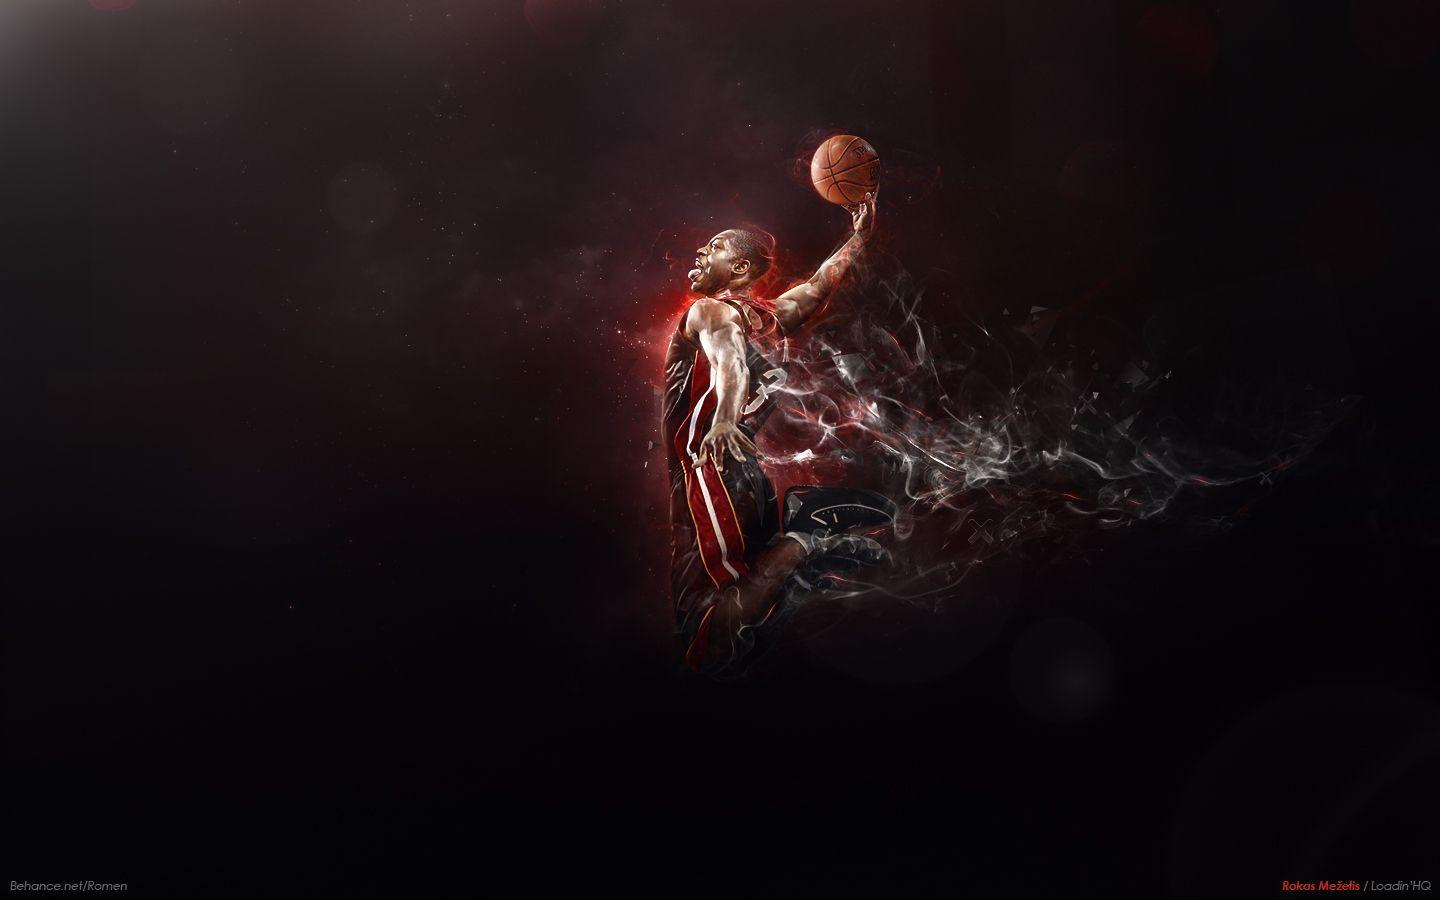 Download NBA Finals Fierce Dwyane Wade Poster Wallpaper